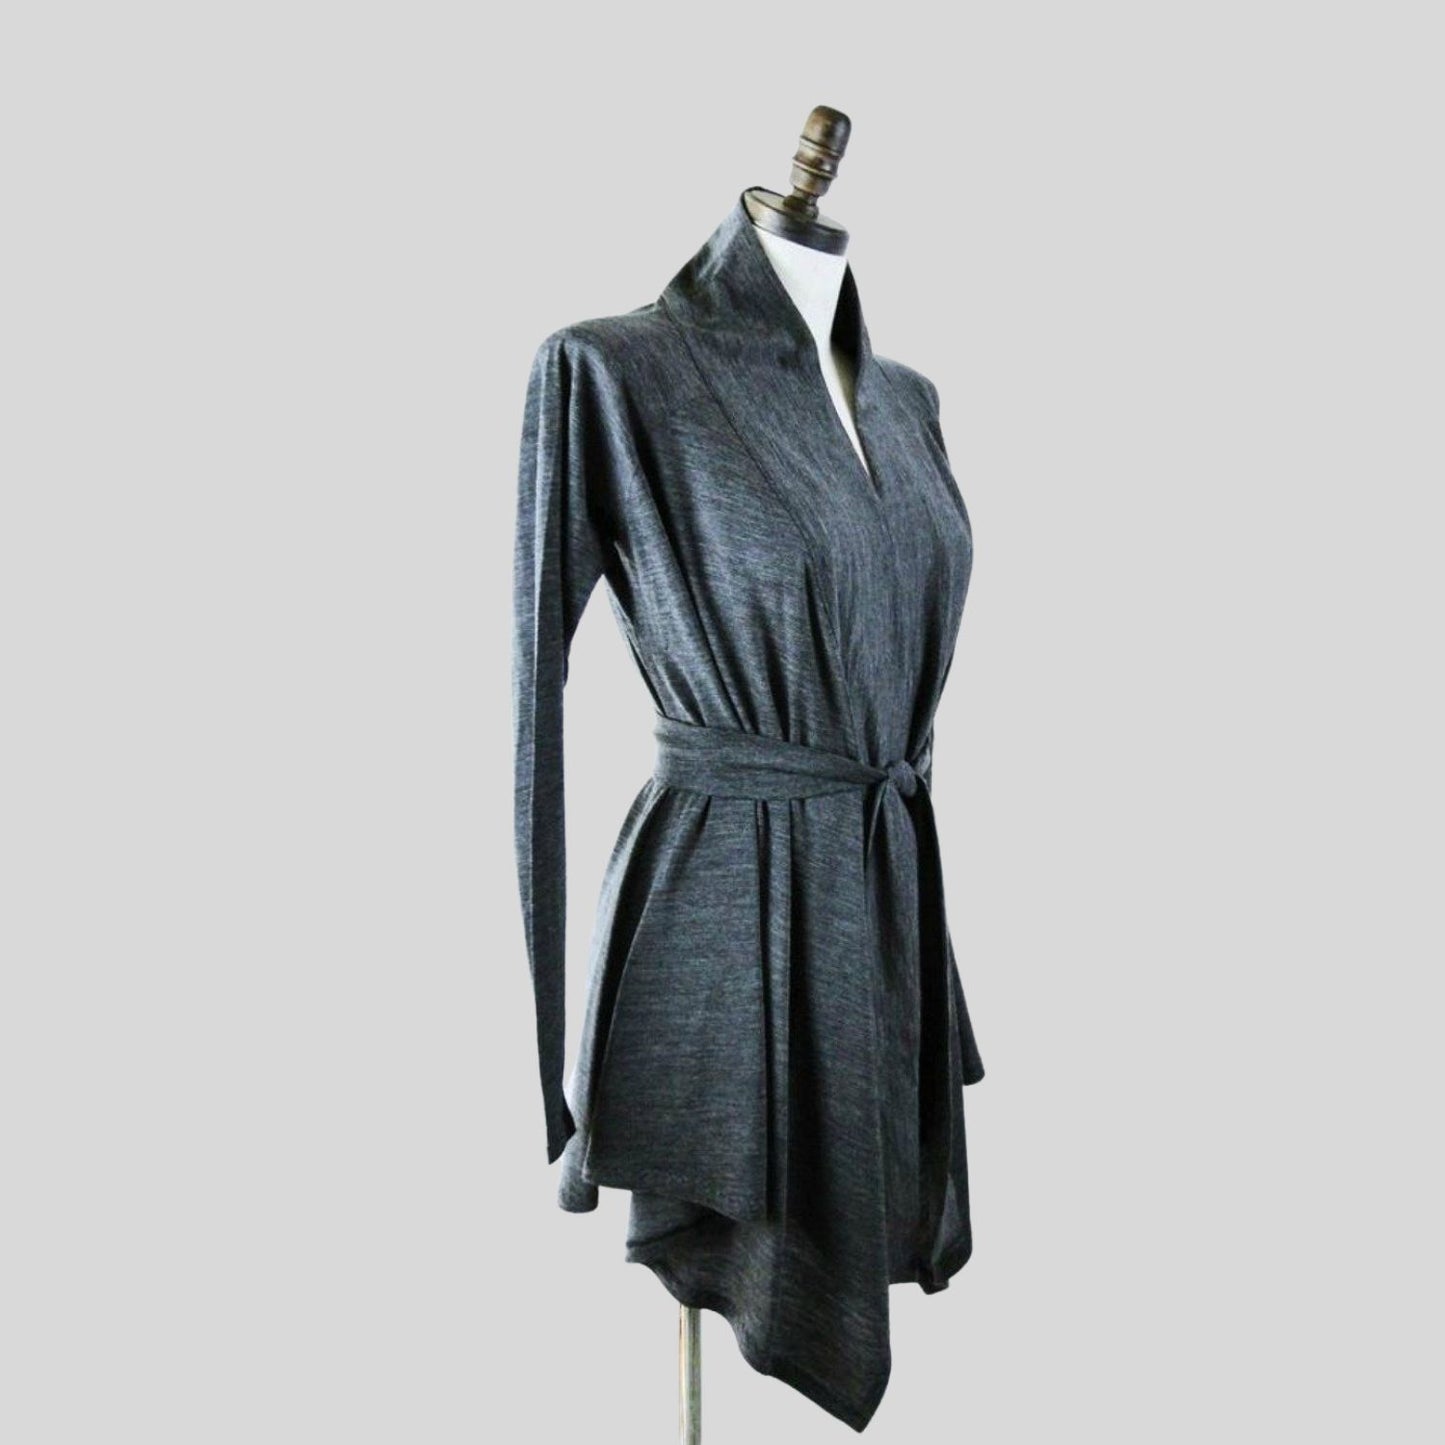 Charcoal grey wool cardigan | 100% merino wool jersey top | Shop merino wool clothing made in Canada | Women's organic clothes store | Econica